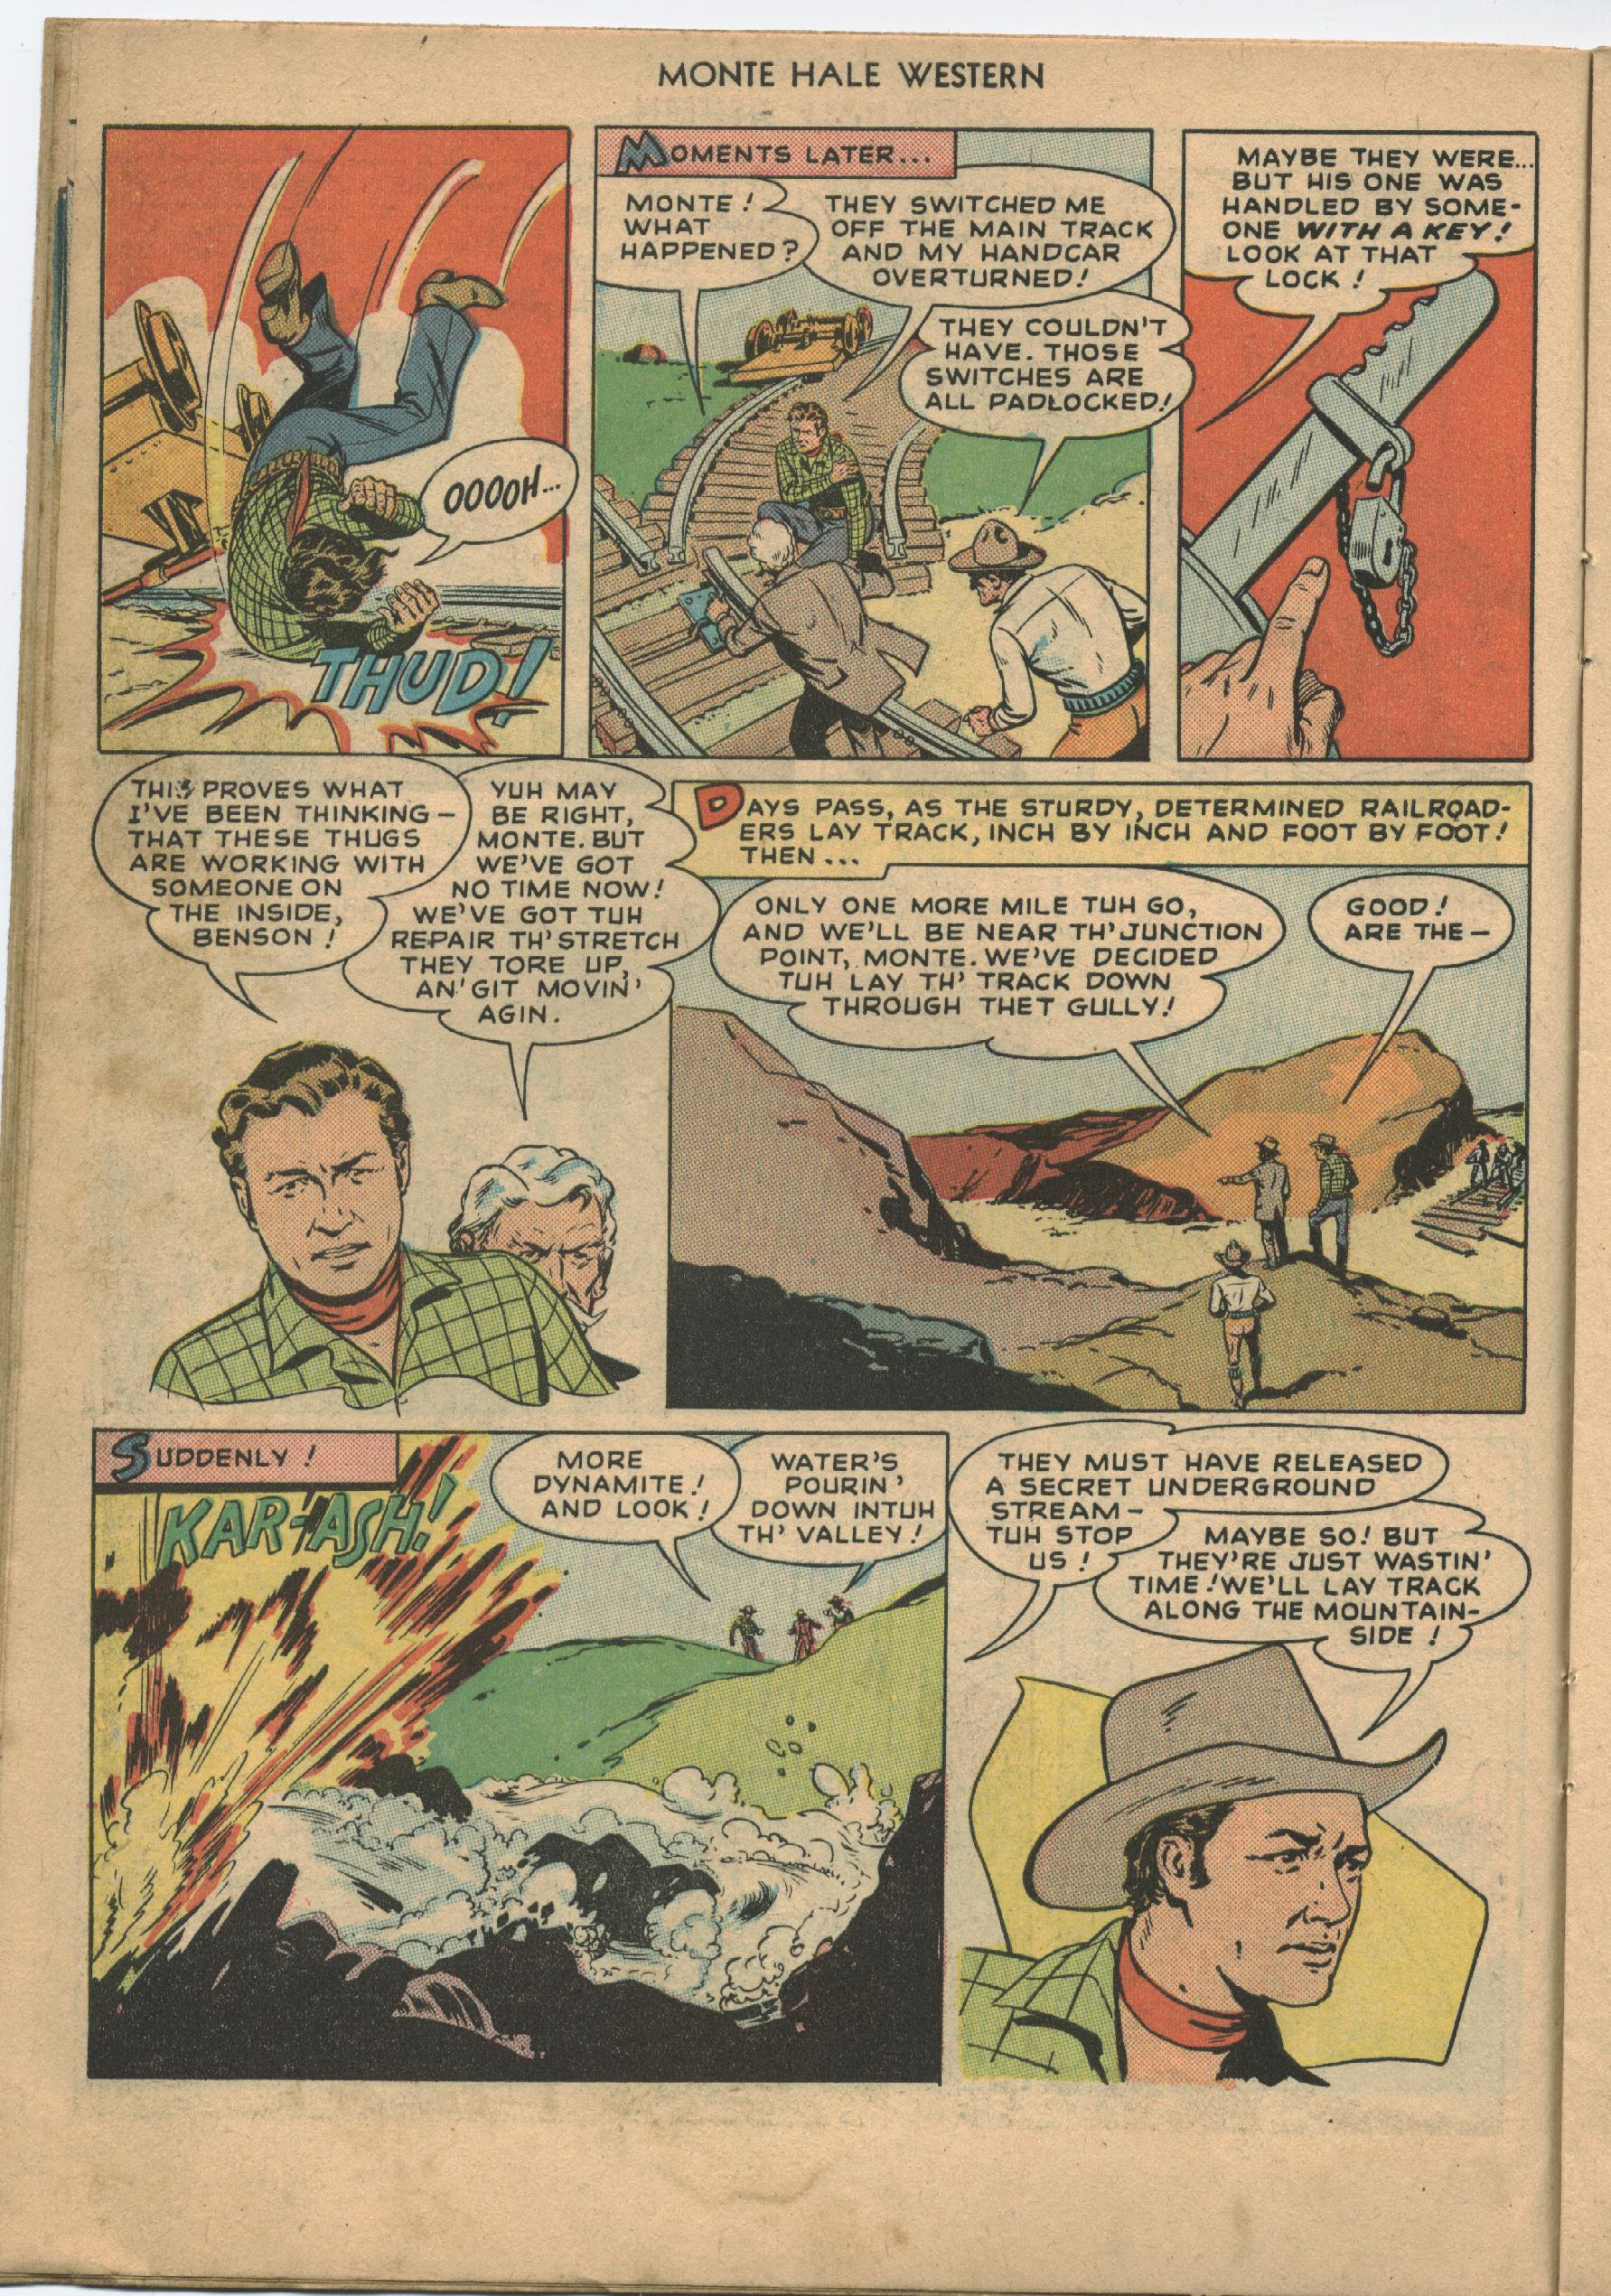 Read online Monte Hale Western comic -  Issue #29 - 22